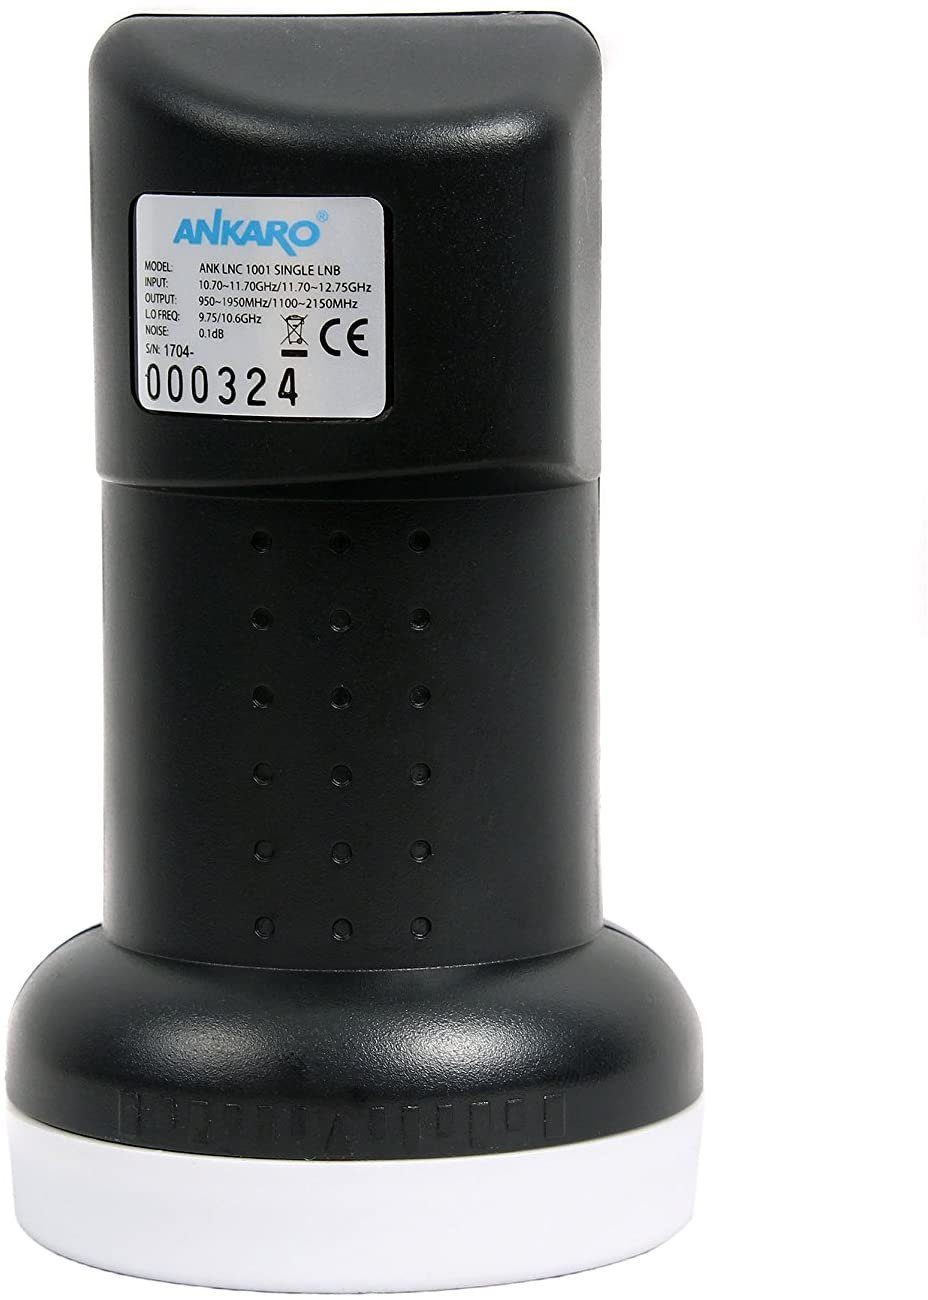 LNC 1001 Ankaro incl. protectet Ankaro Wetterschutztülle, Single LTE Premium Universal-Single-LNB